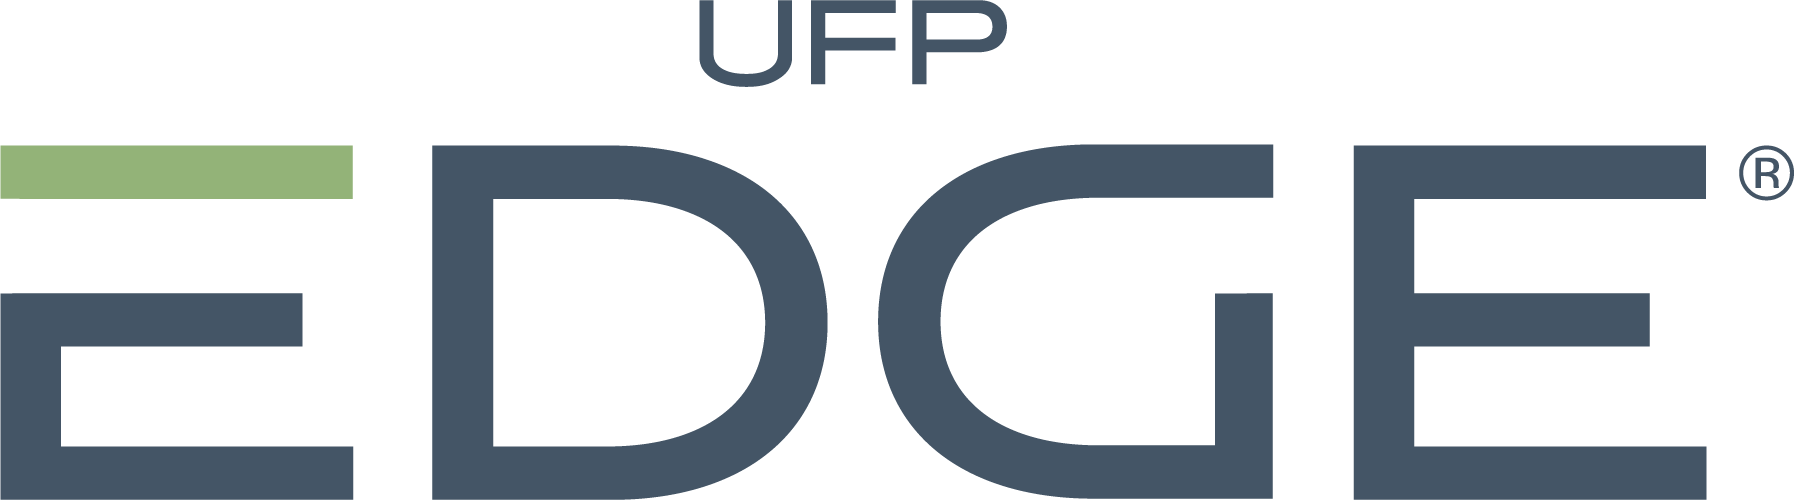 UFP-Edge no tagline Logo